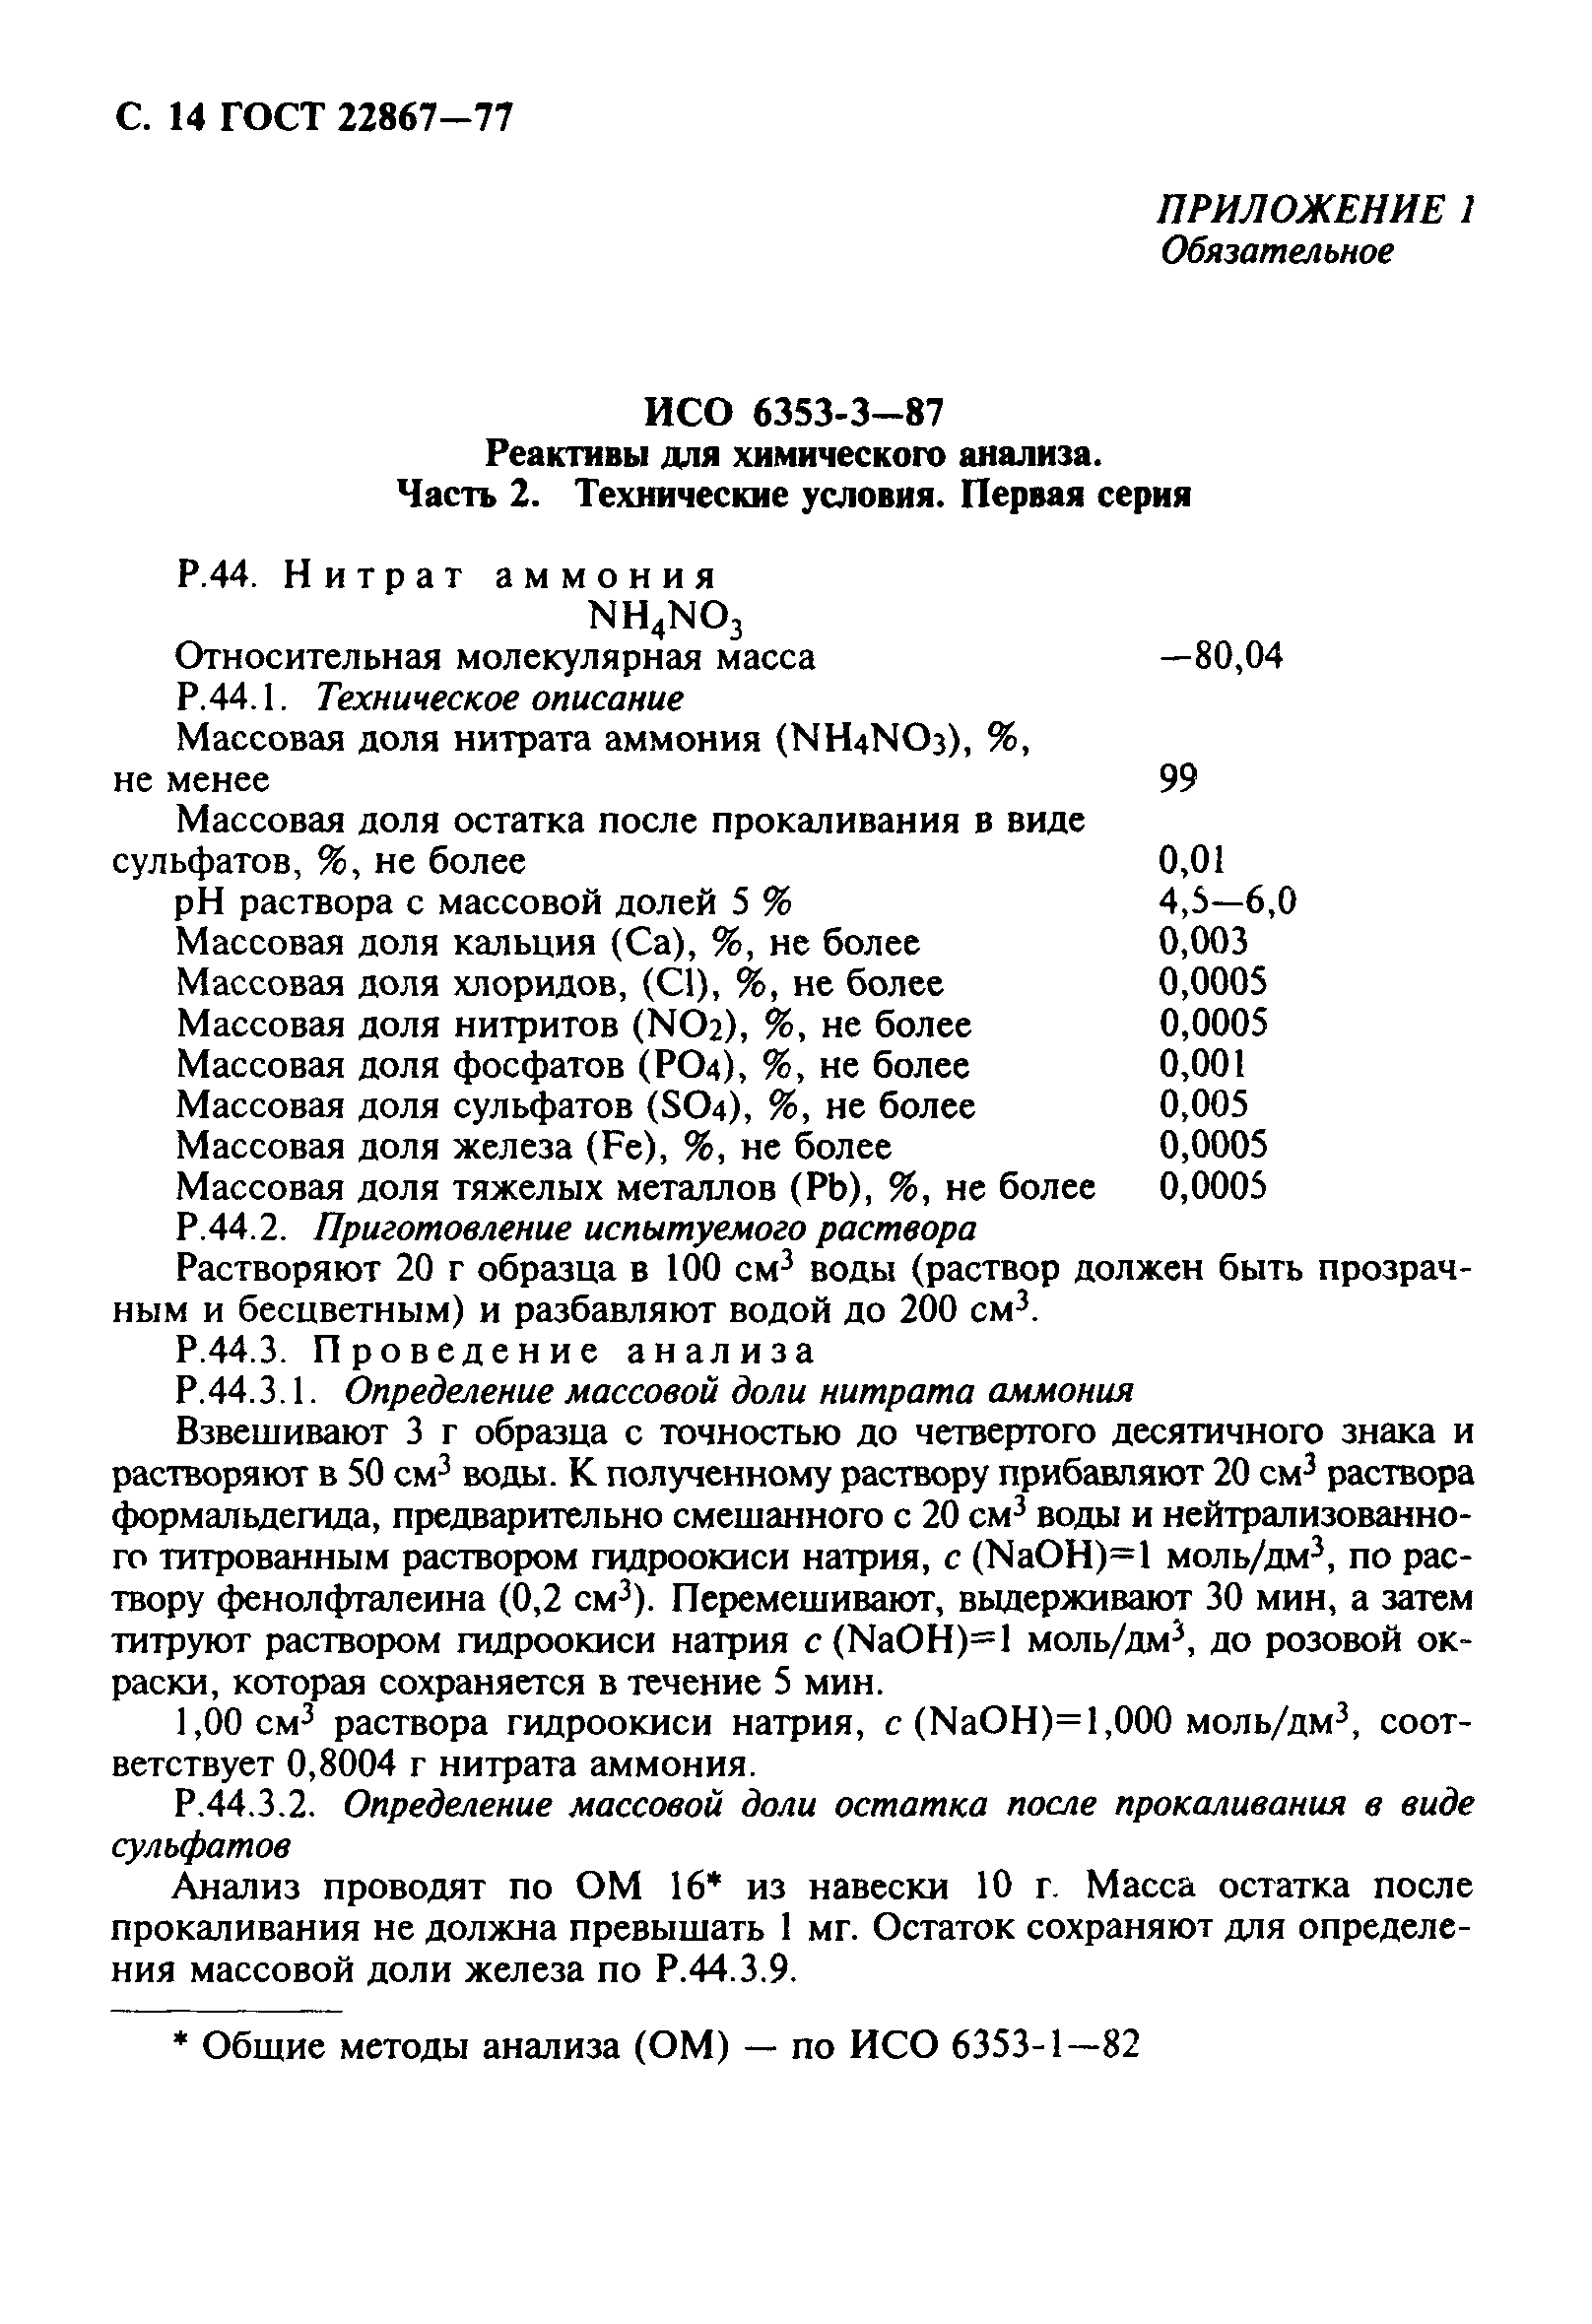 ГОСТ 22867-77